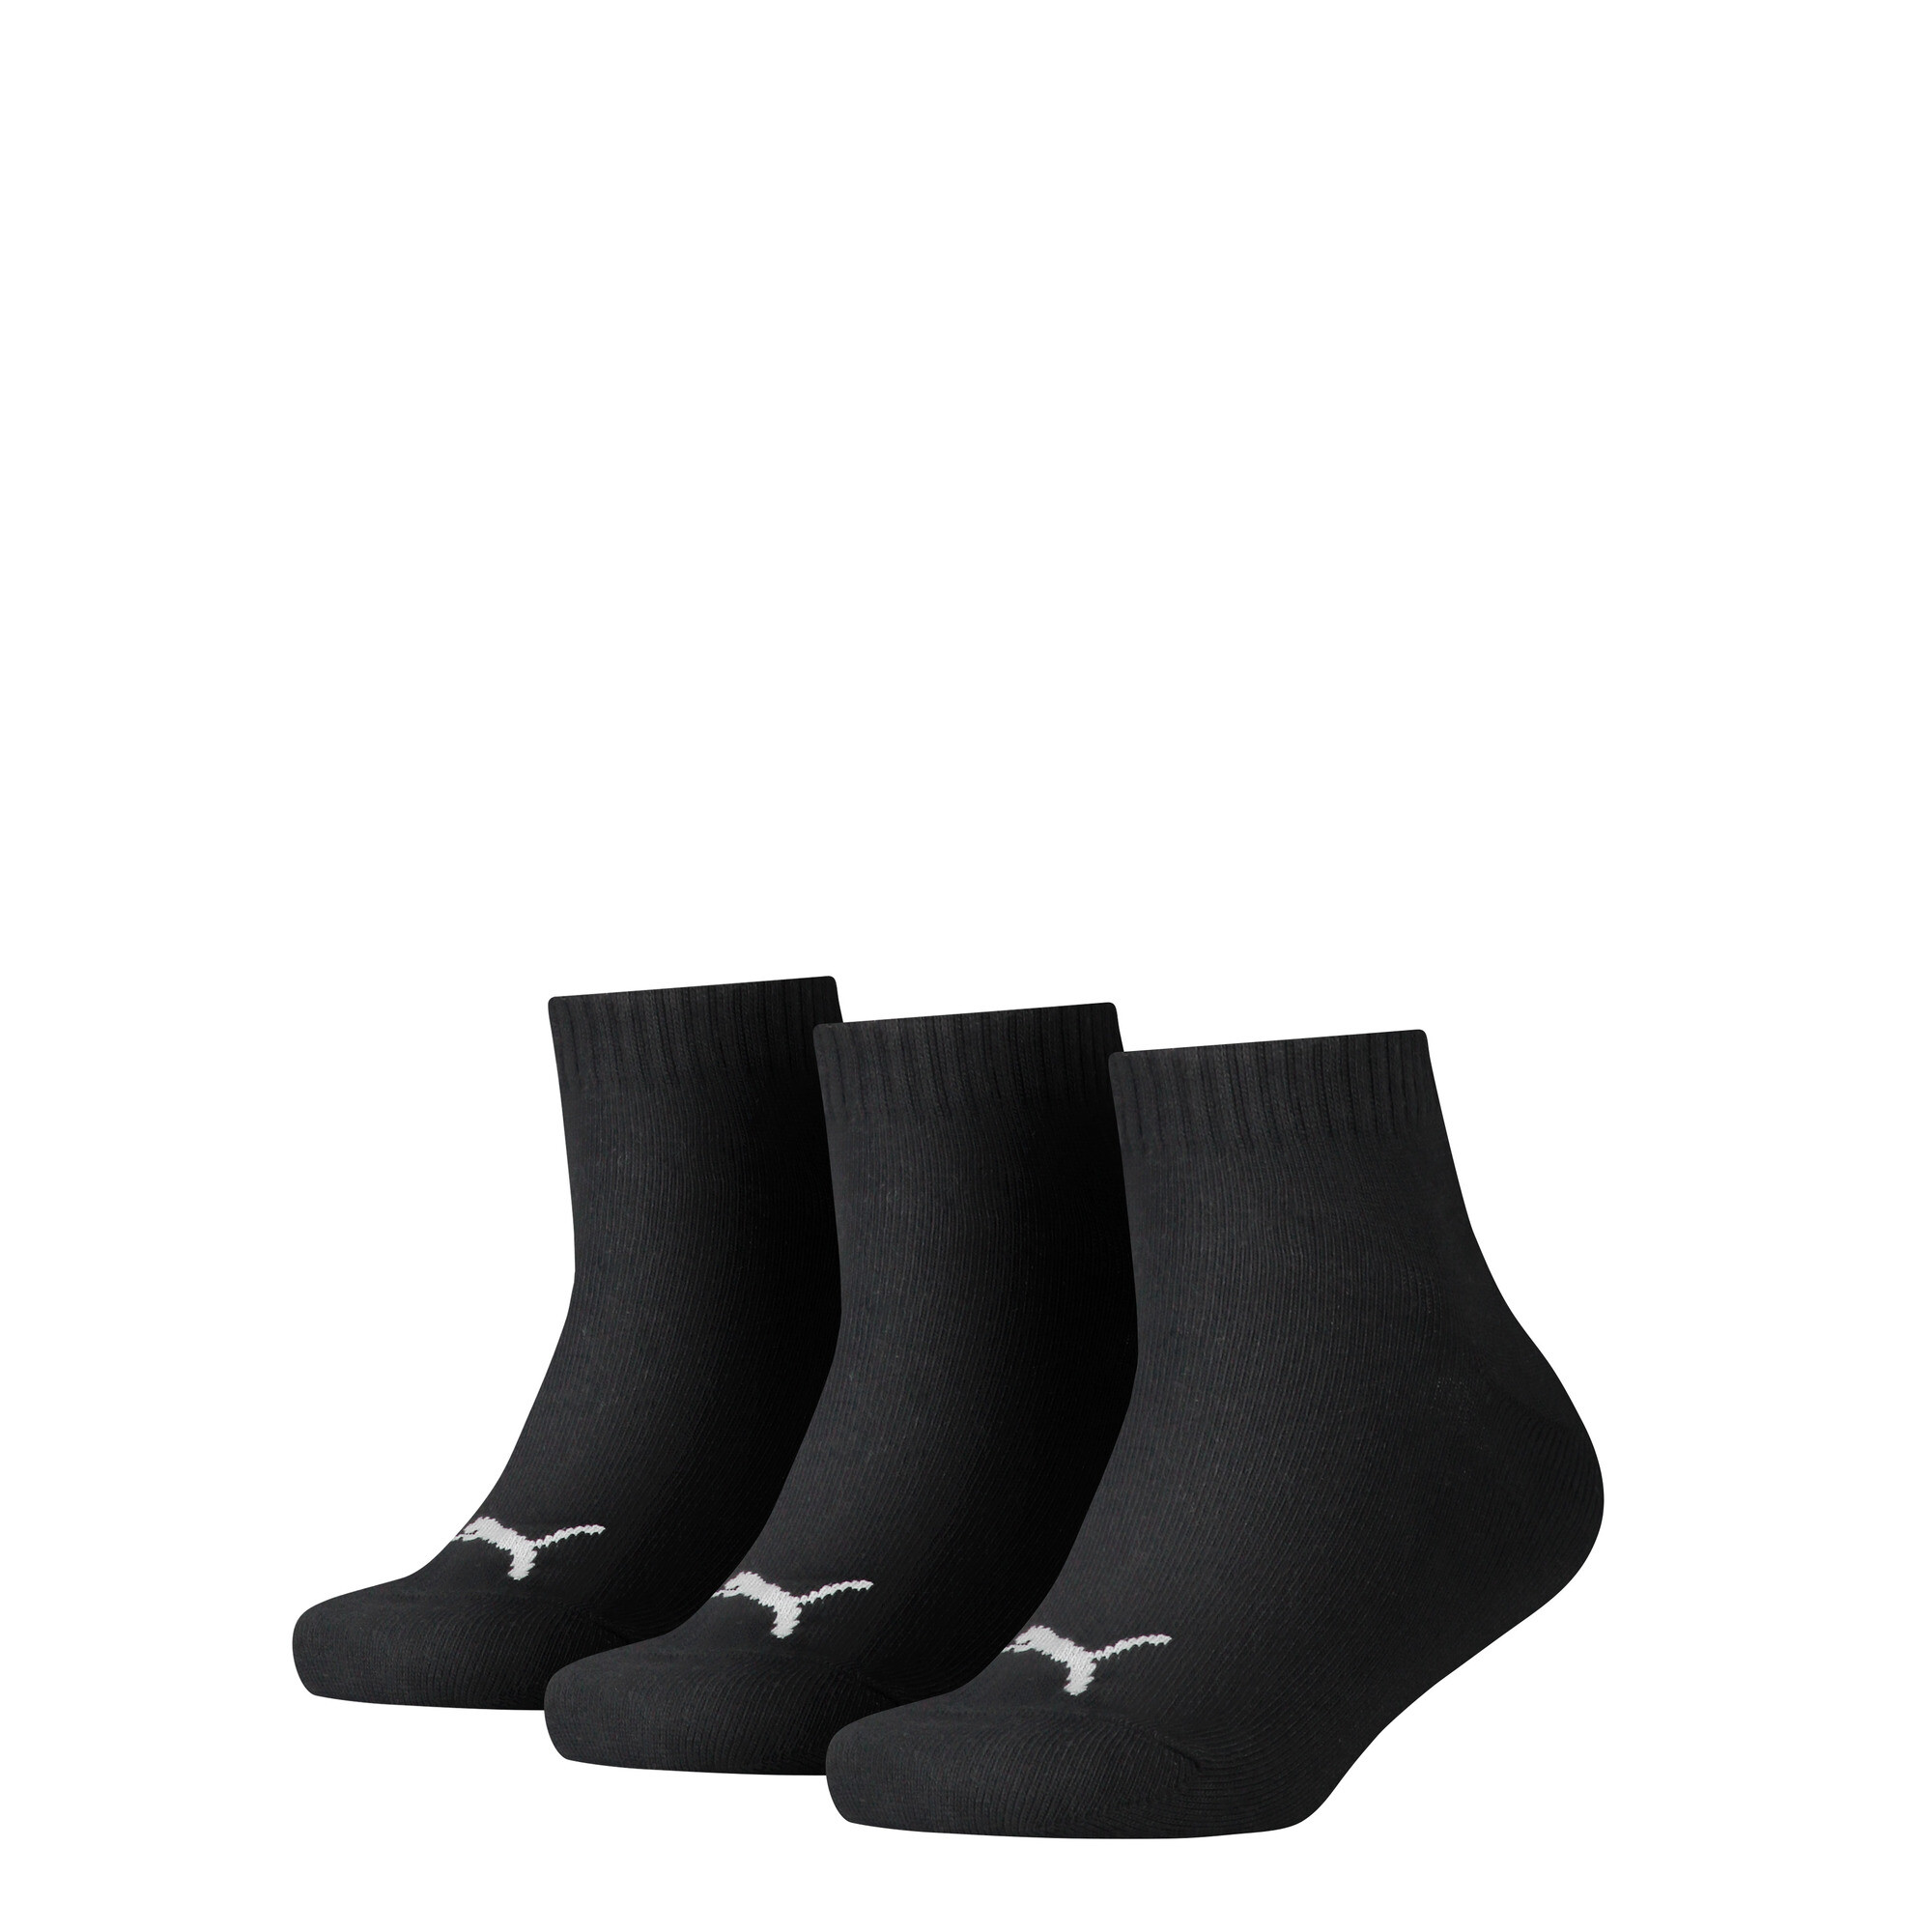 Kids' PUMA Quarter Socks 3 Pack In Black, Size 23-26